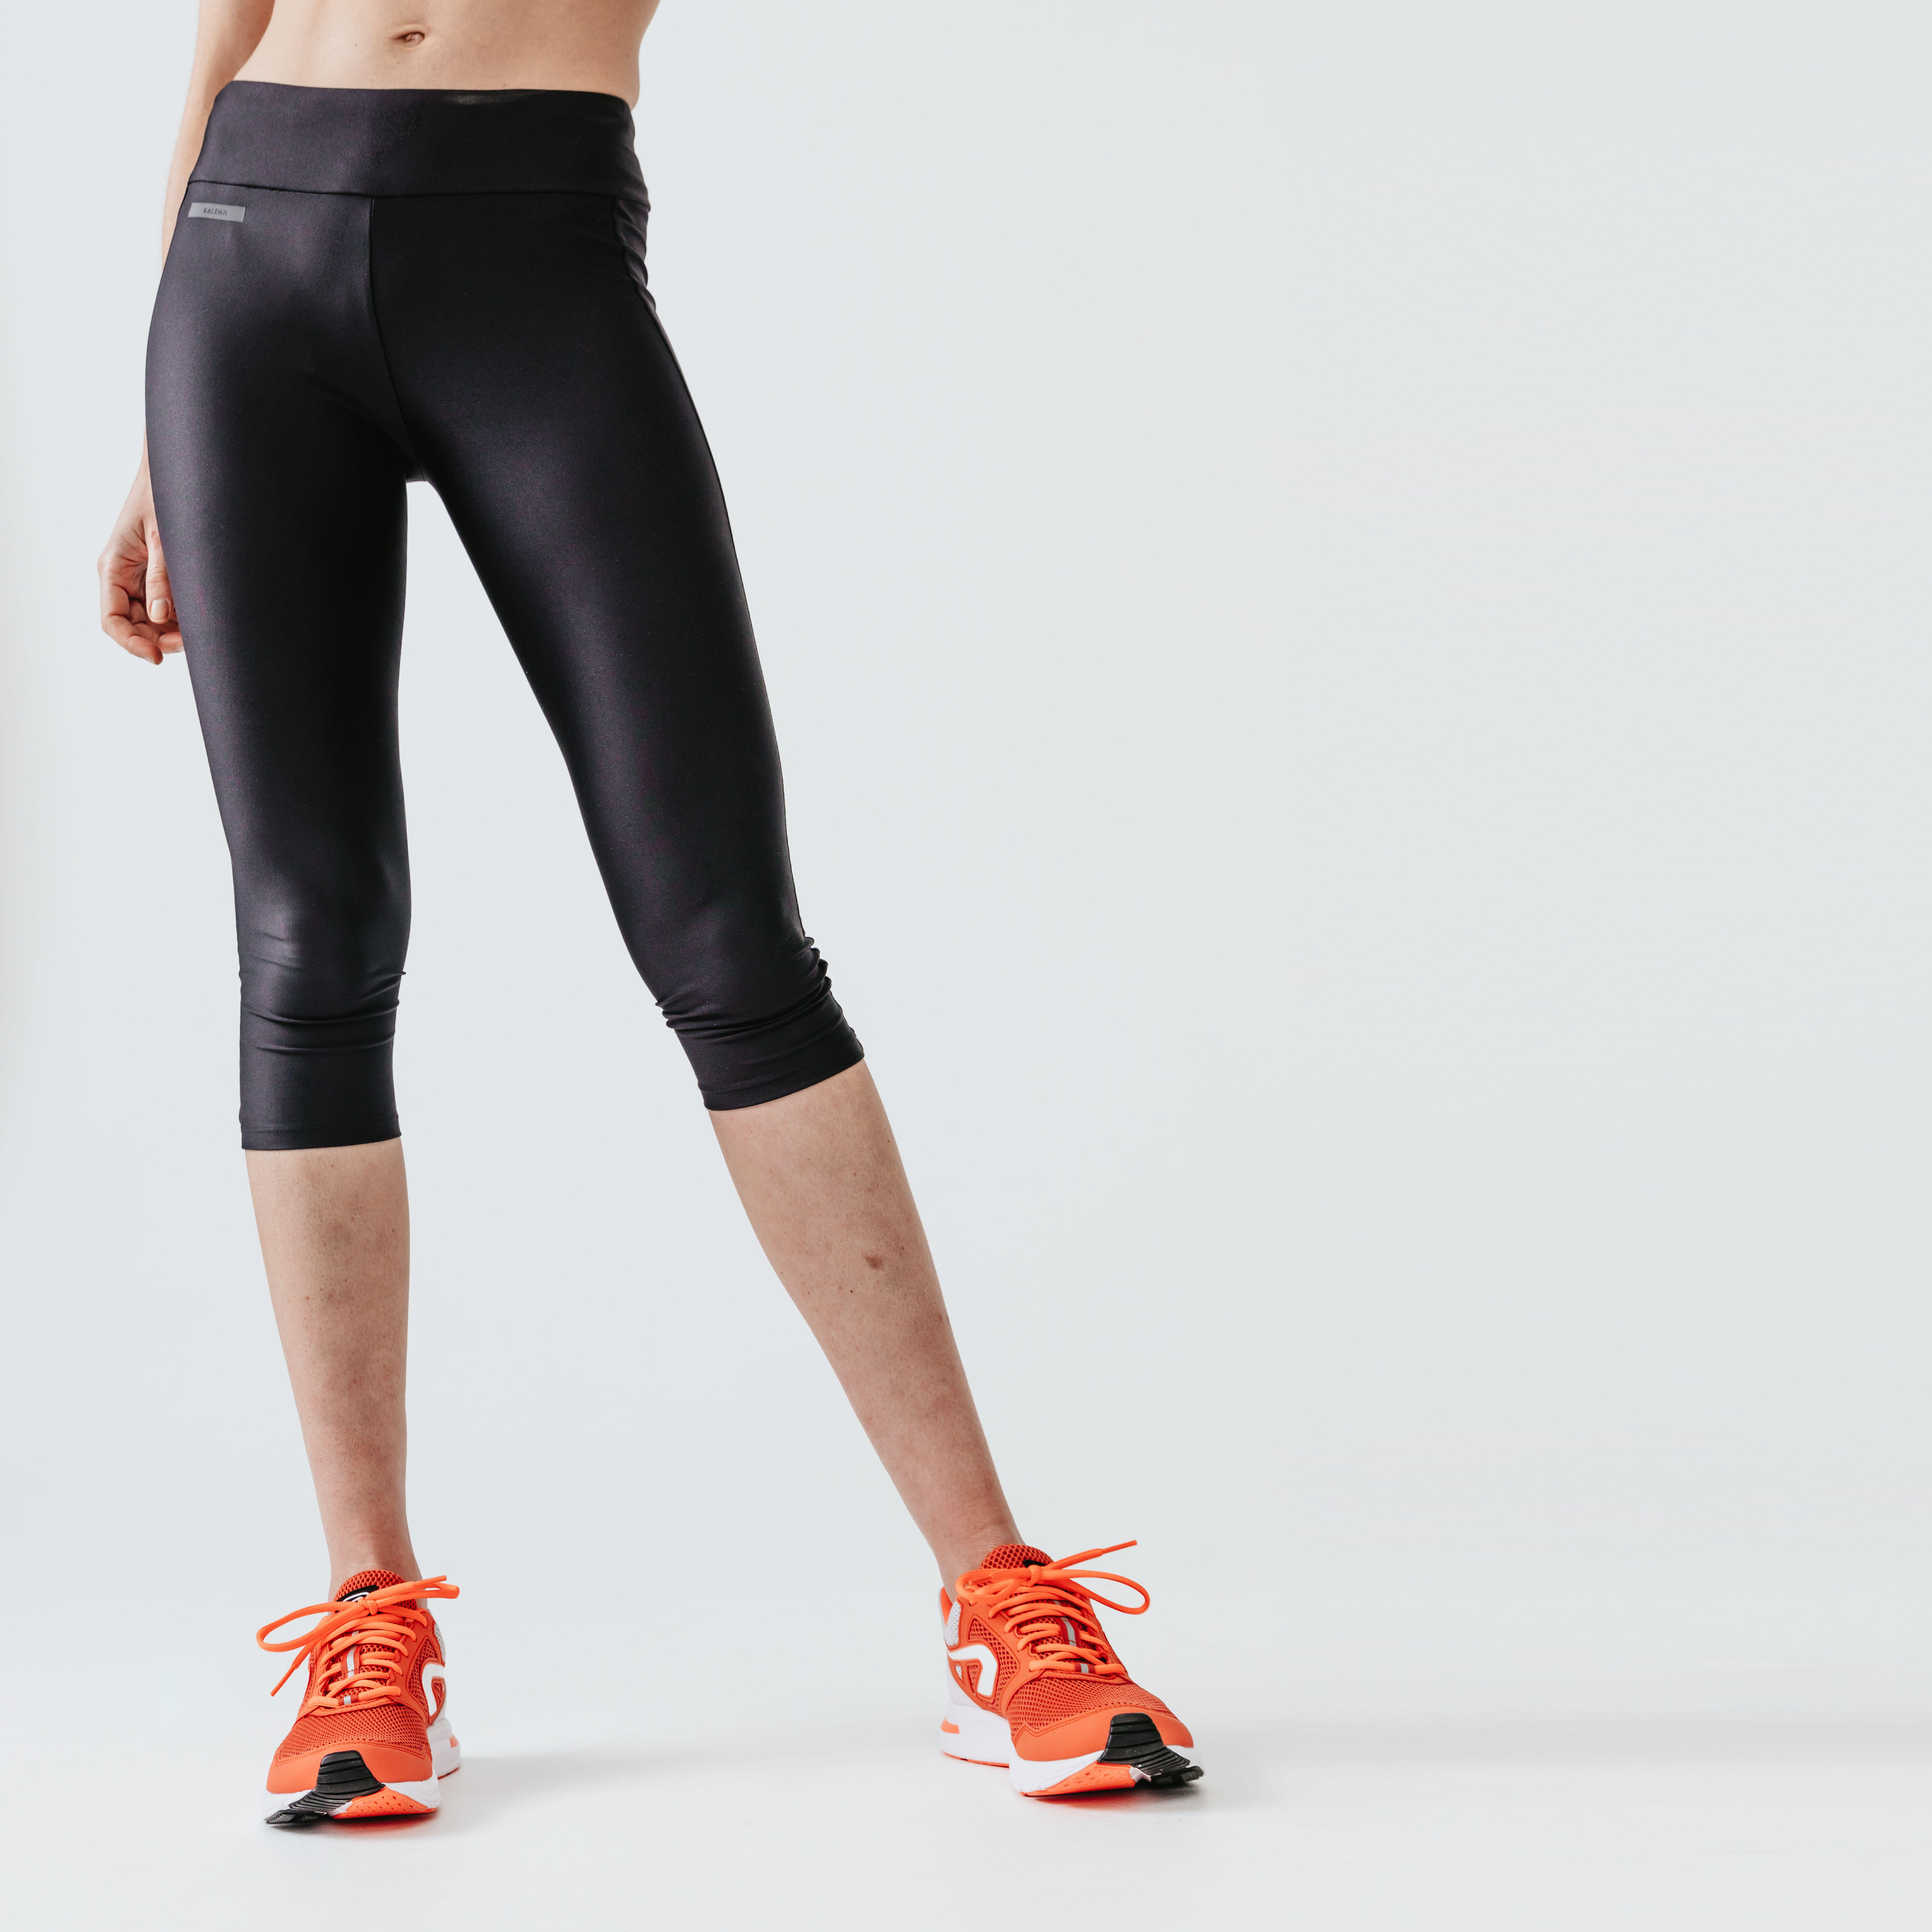 Women's quick-drying training leggings